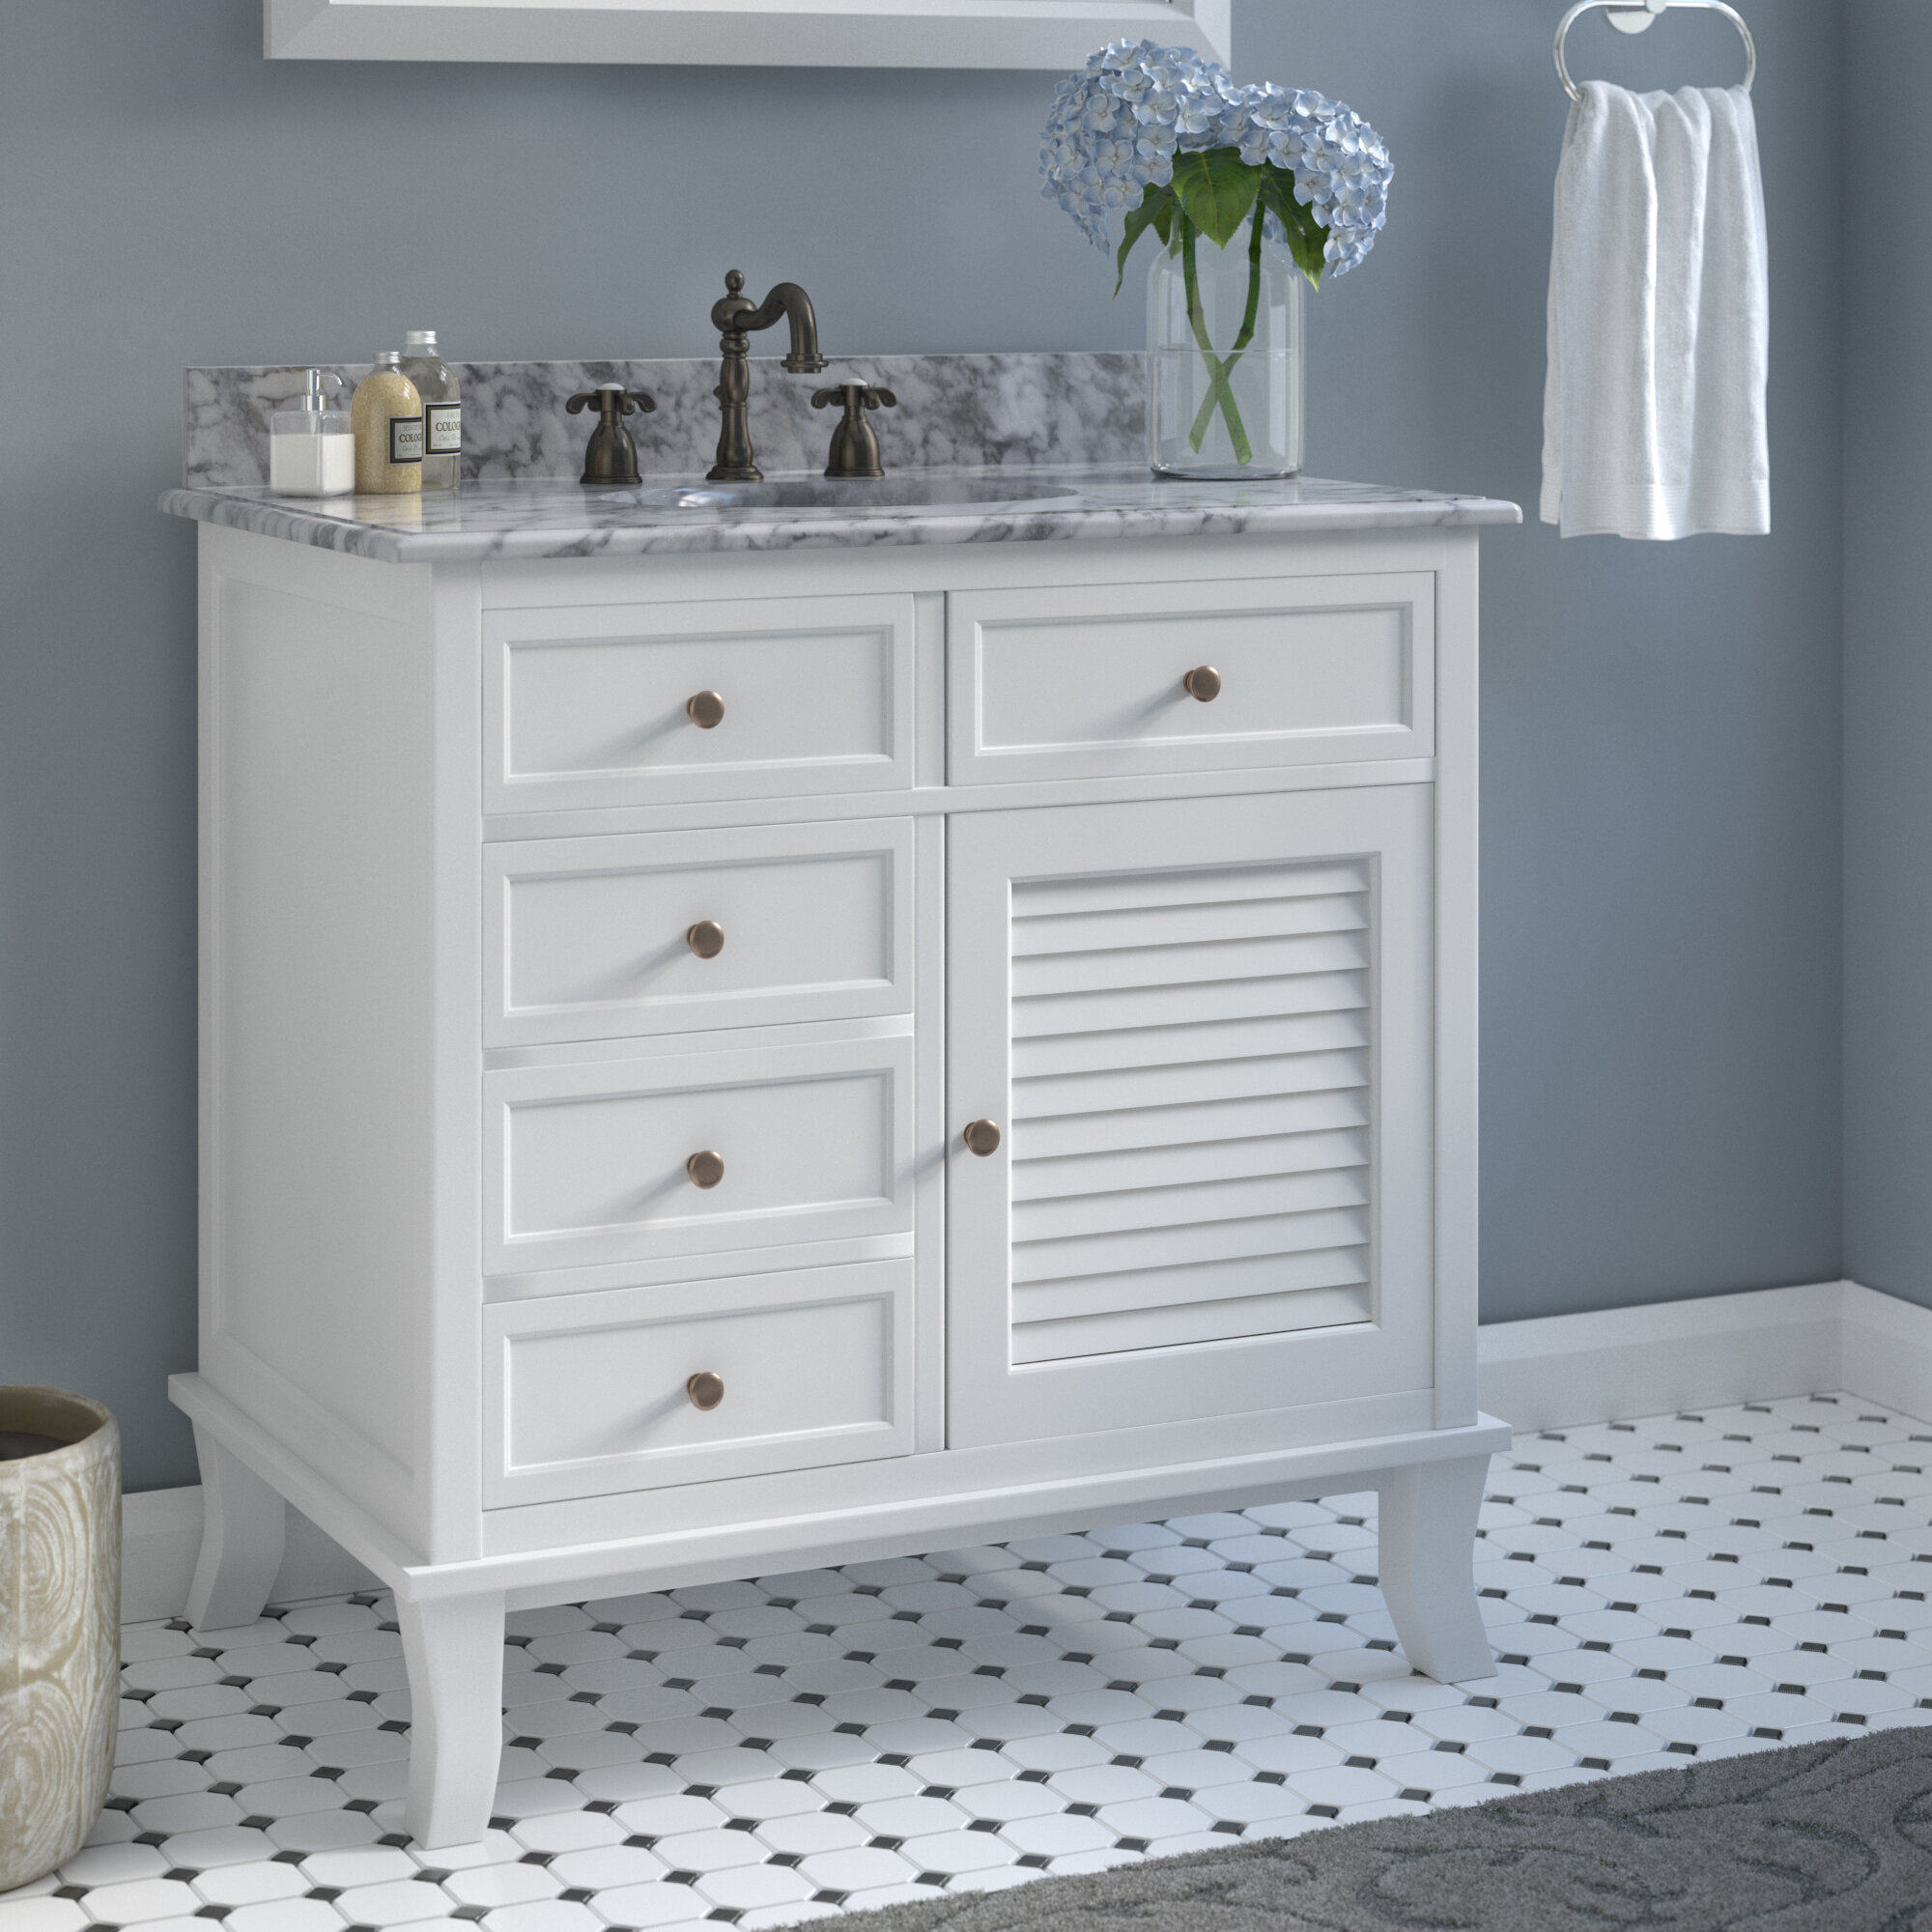 Andover Mills Doris 34 Single Bathroom Vanity Set With Marble Counter Top Reviews Wayfair